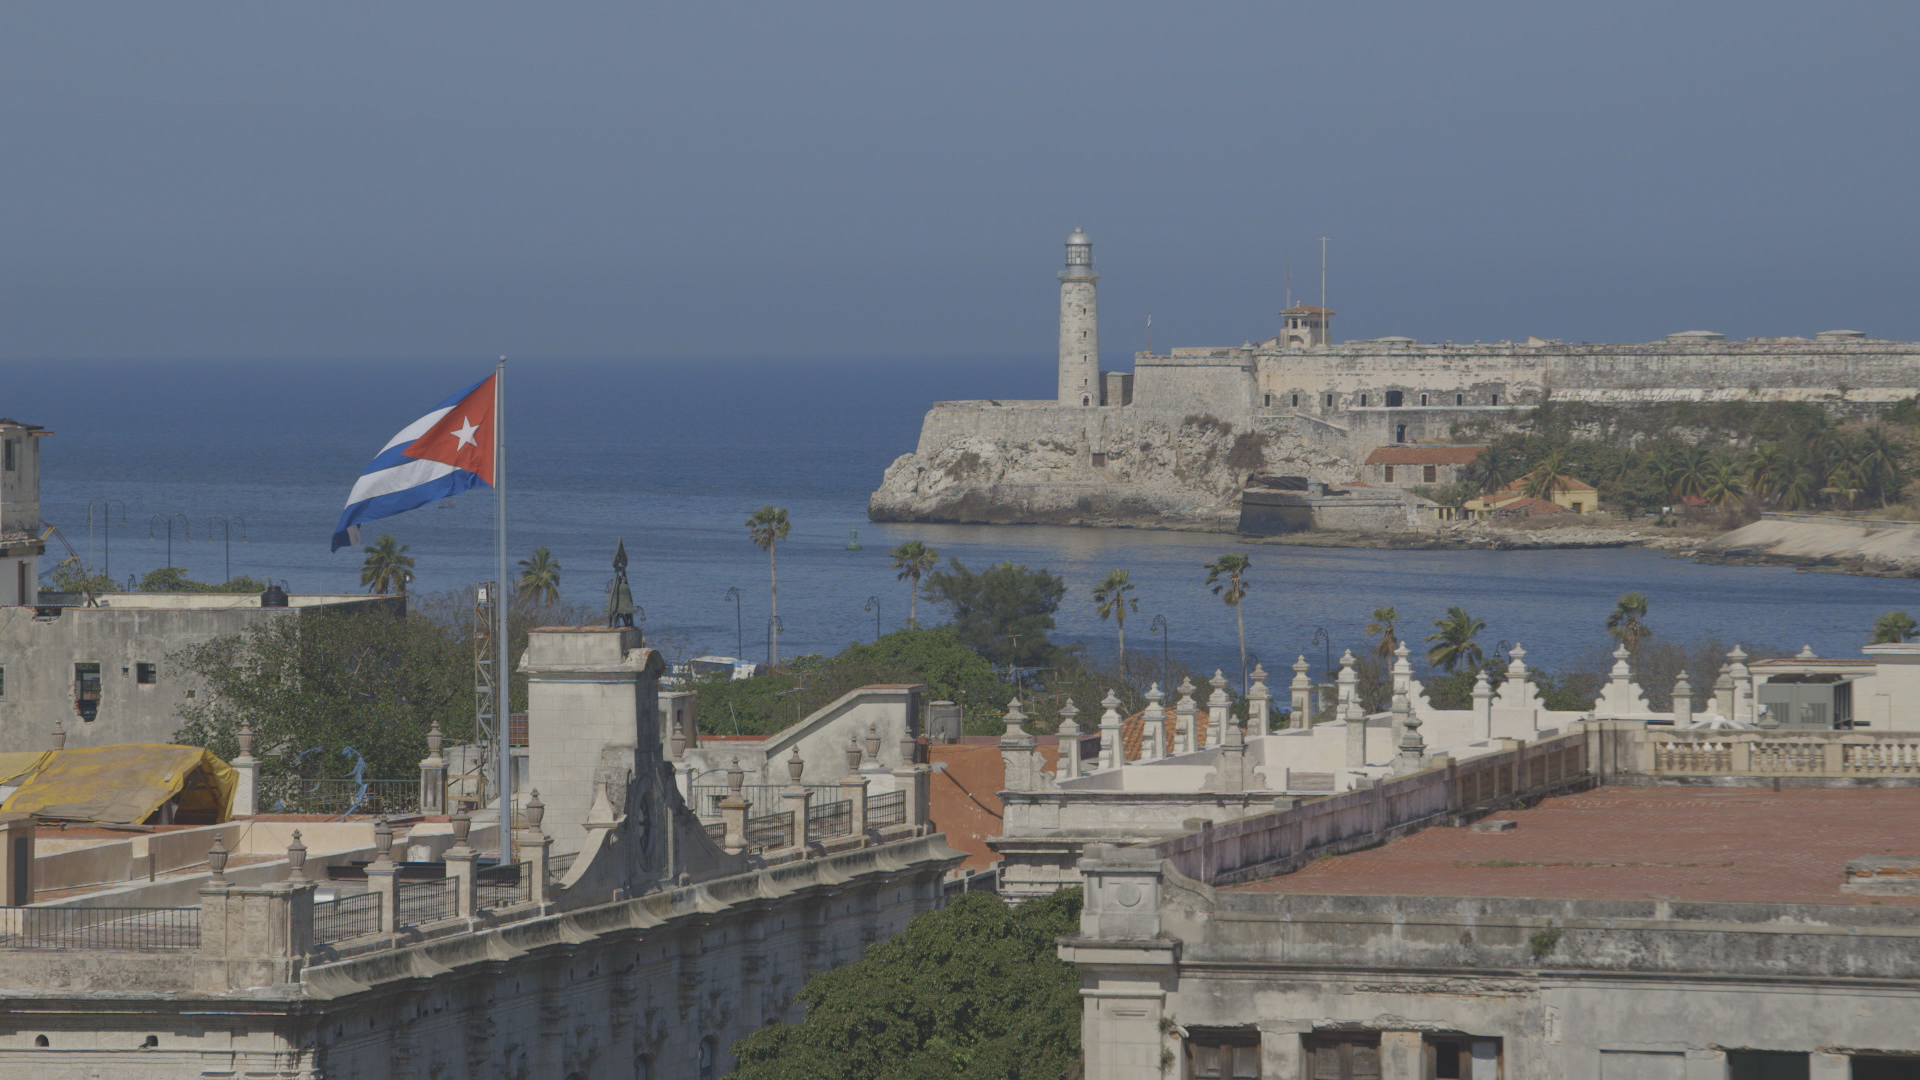  CUBA- Panomarica Havana Renato.
(Photo Credit: National Geographic Channels) 